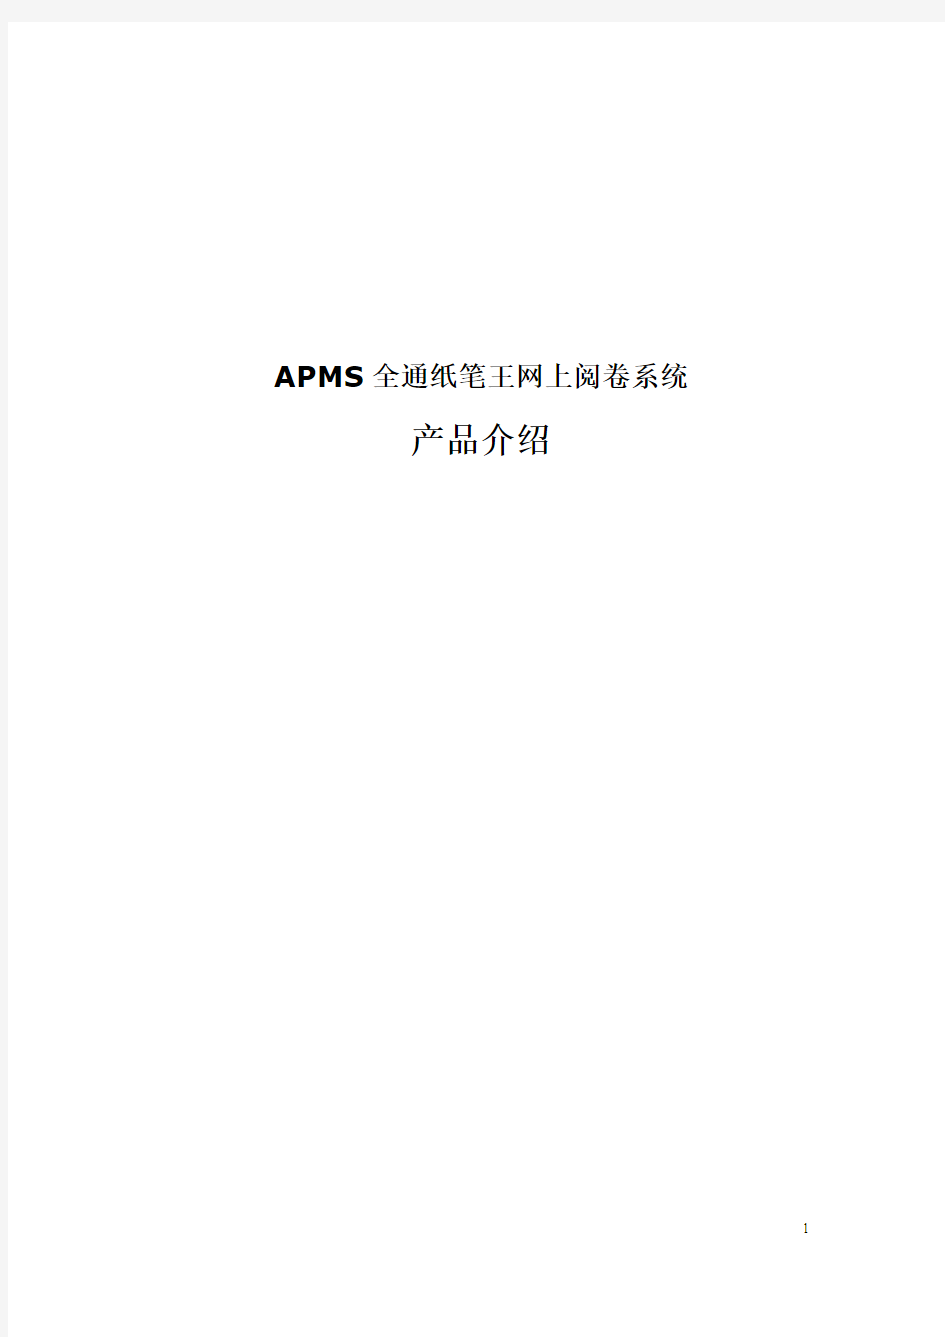 APMS网上阅卷系统产品介绍